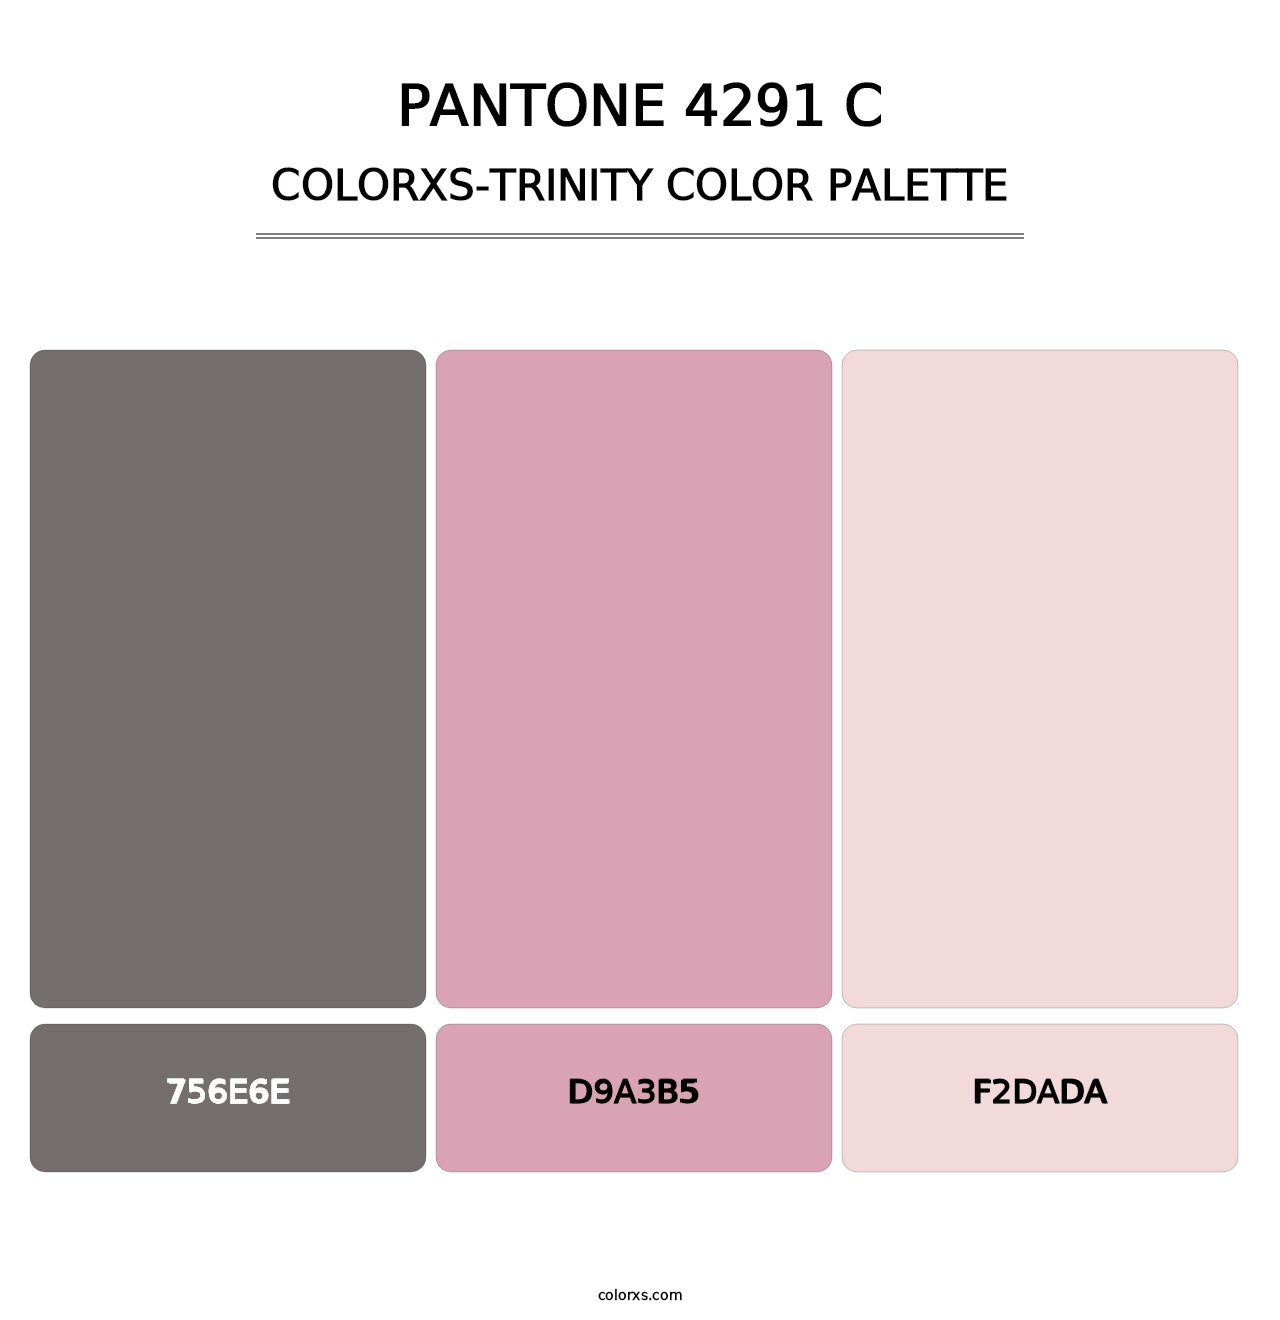 PANTONE 4291 C - Colorxs Trinity Palette